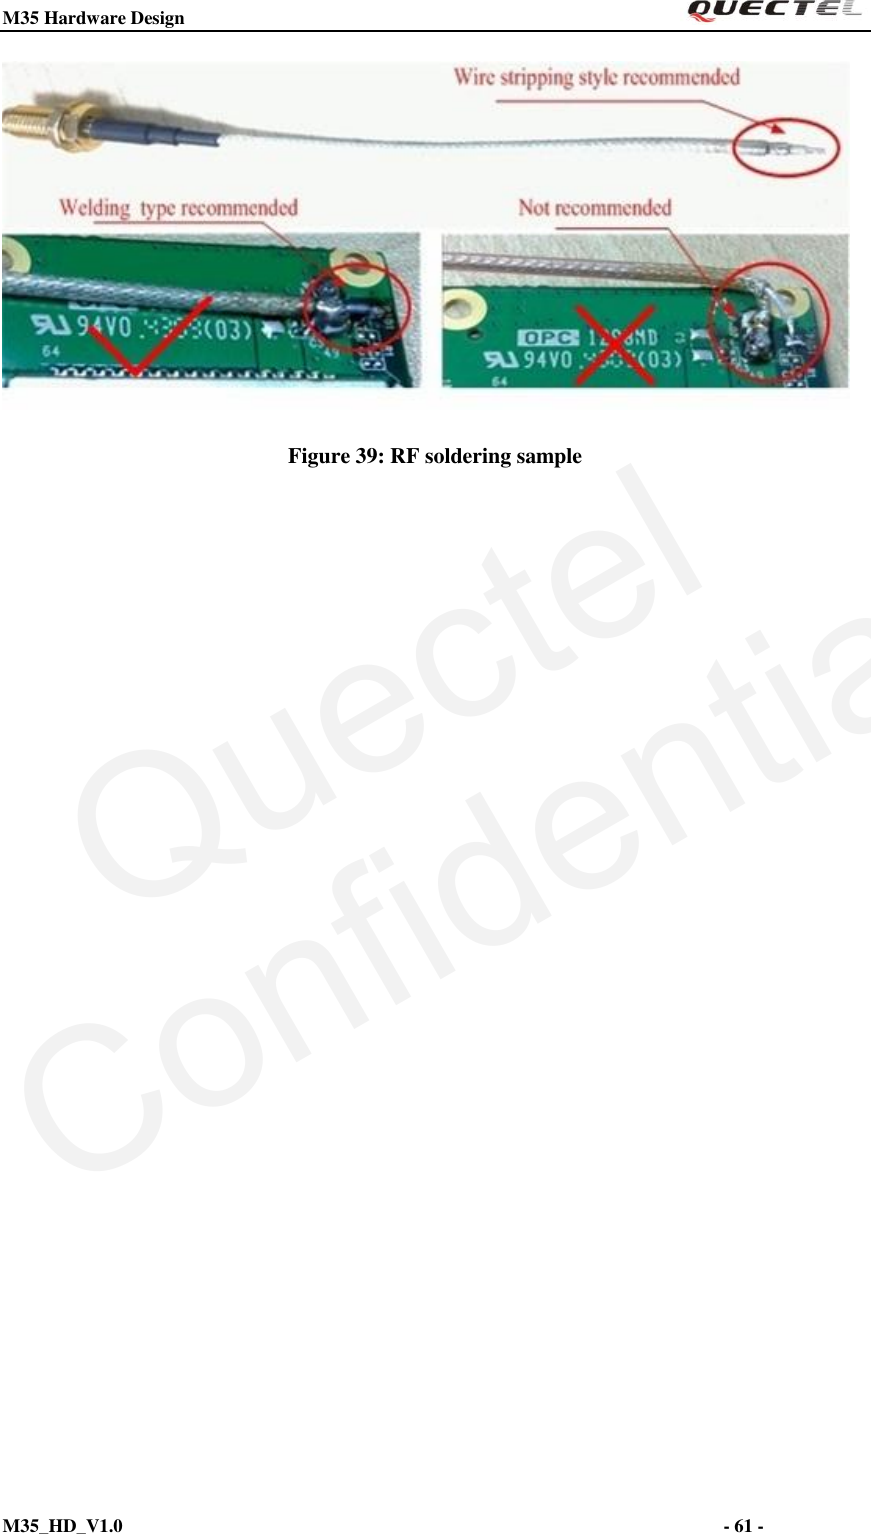 M35 Hardware Design                                                                  M35_HD_V1.0                                                                                                                         - 61 -     Figure 39: RF soldering sample               QuectelConfidential